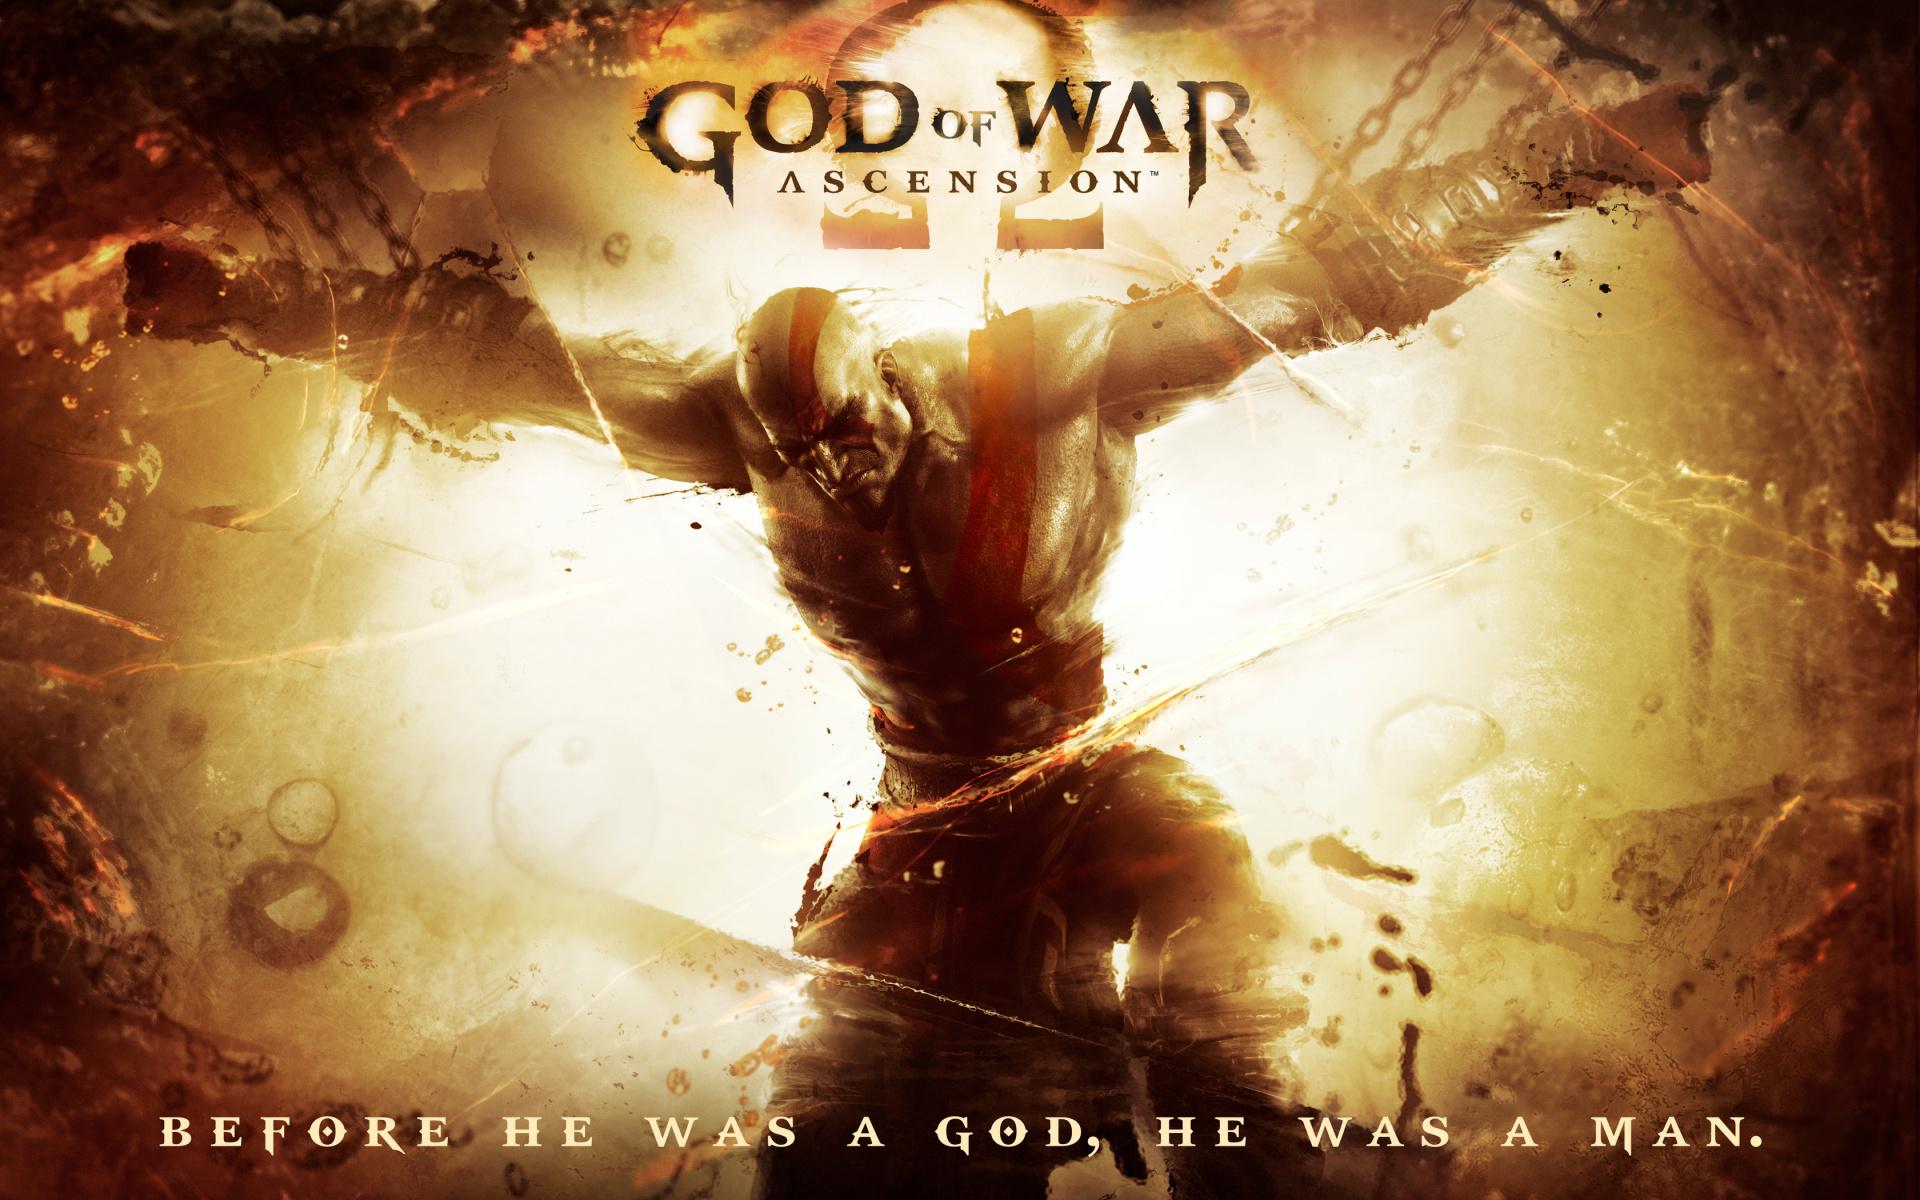 requisitos minimos para god of war 3 pc